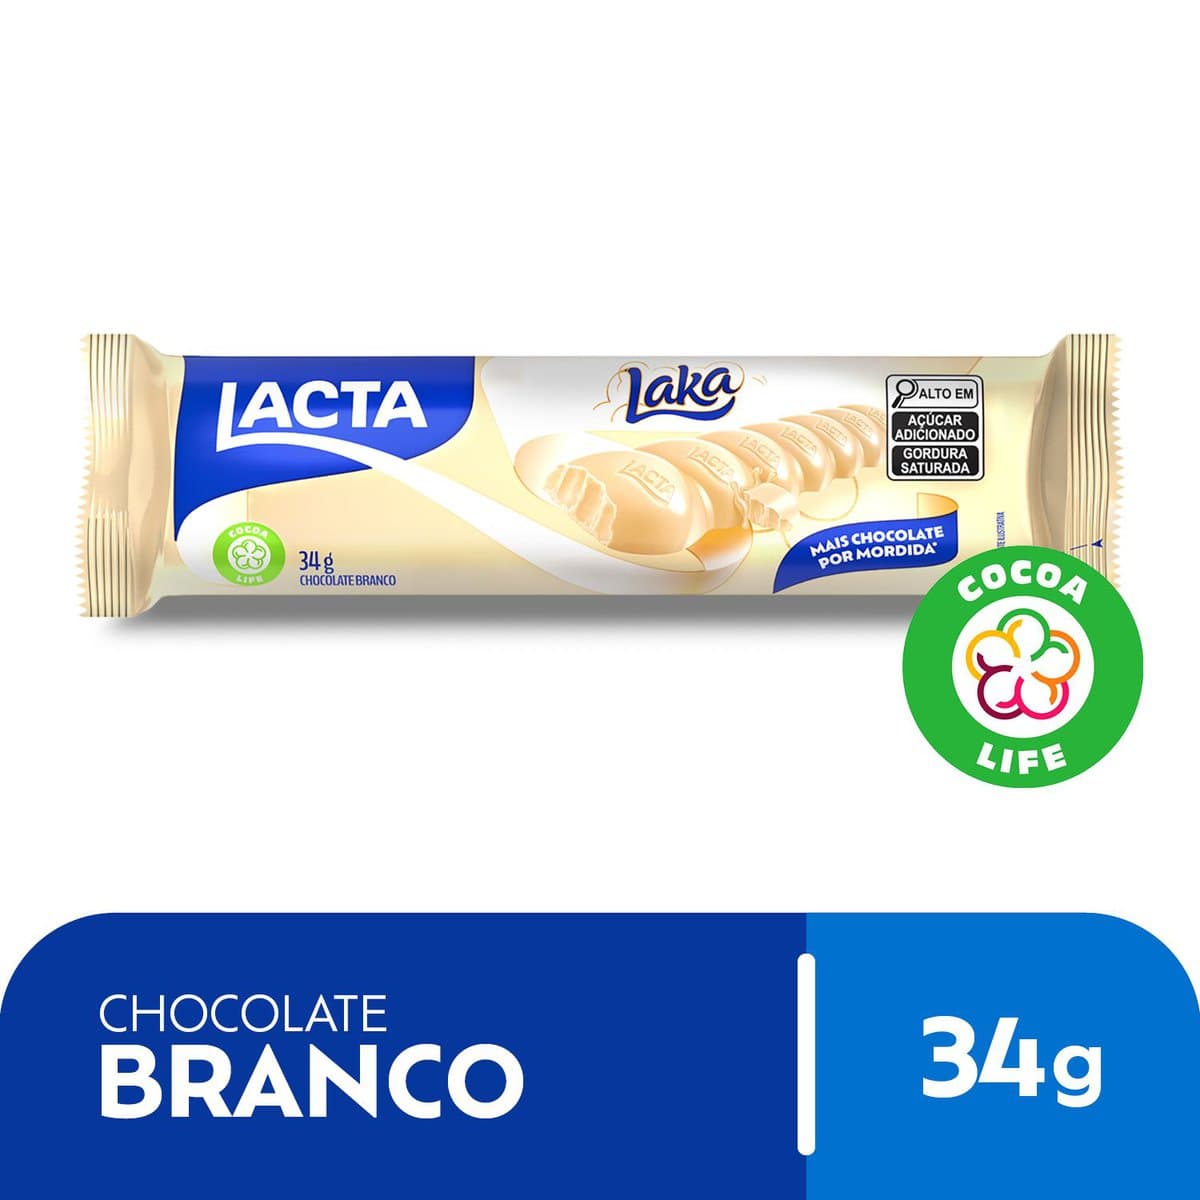 Chocolate Branco Lacta Laka 34g - Cantinho Brasileiro